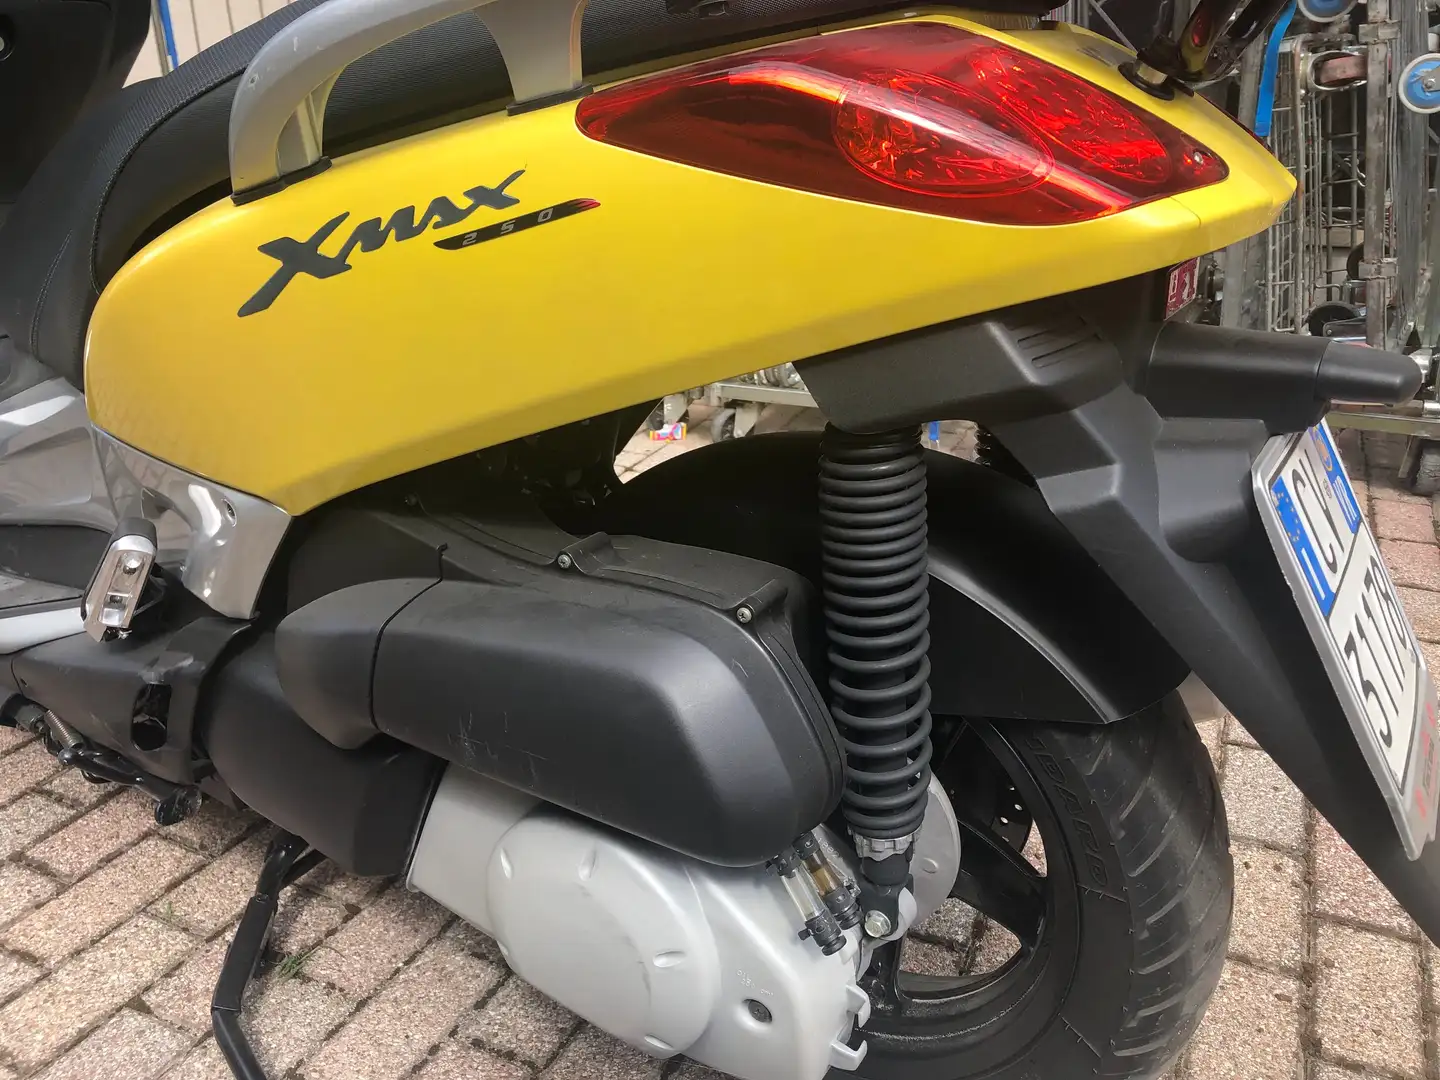 Yamaha X-Max 250 Yellow - 2